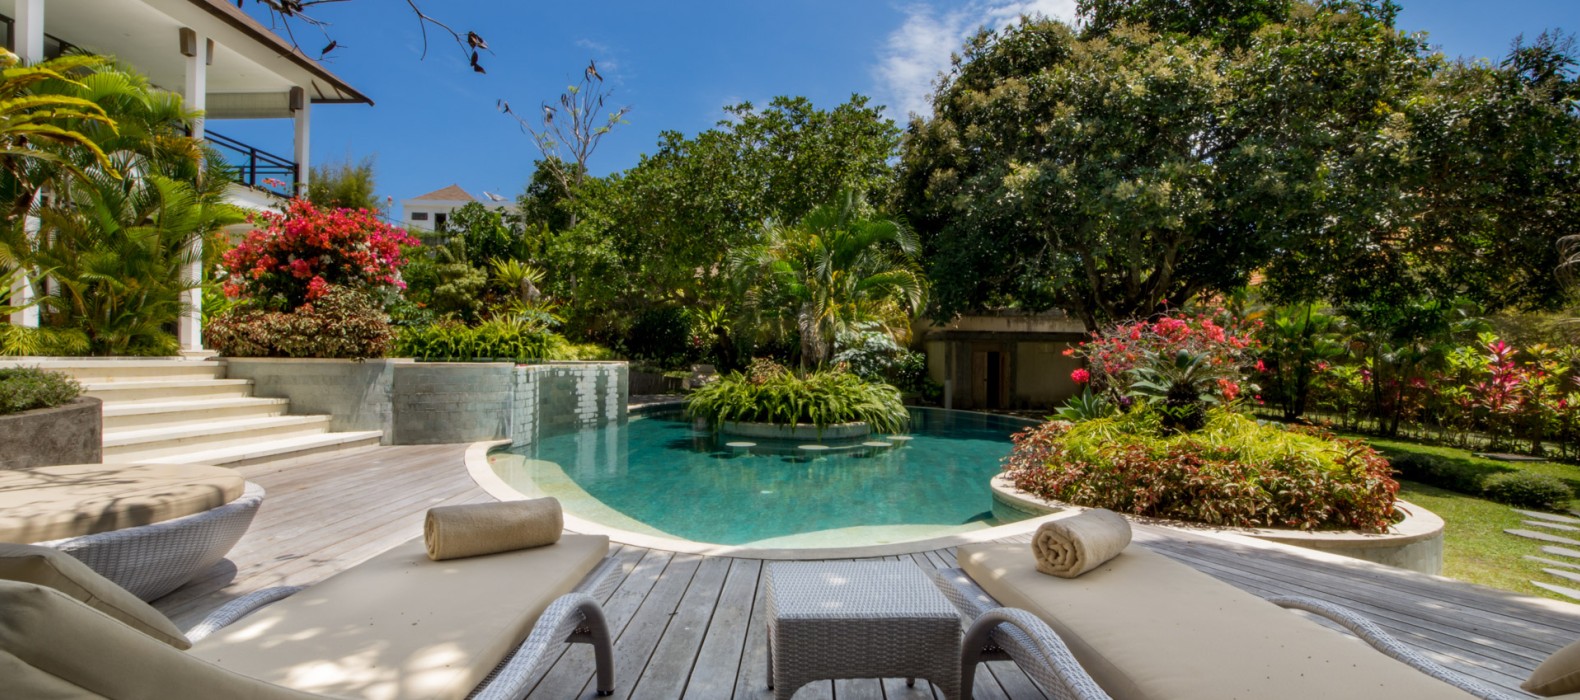 Exterior pool view of Villa Kajuharo in Bali